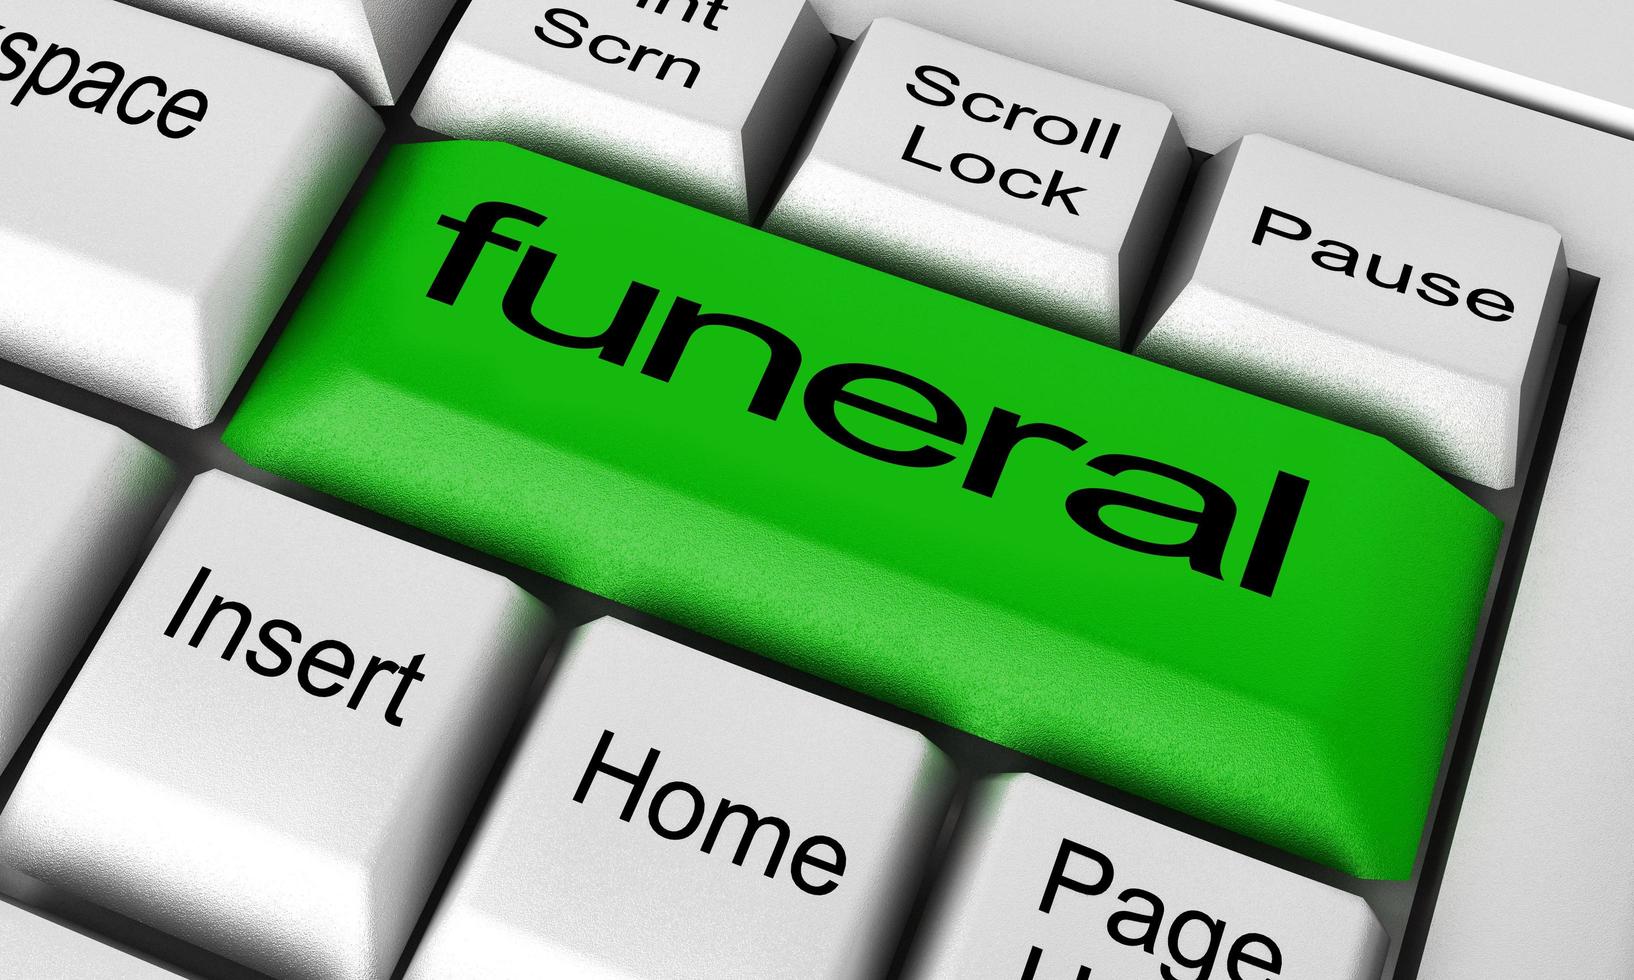 begravningsord på tangentbordsknappen foto